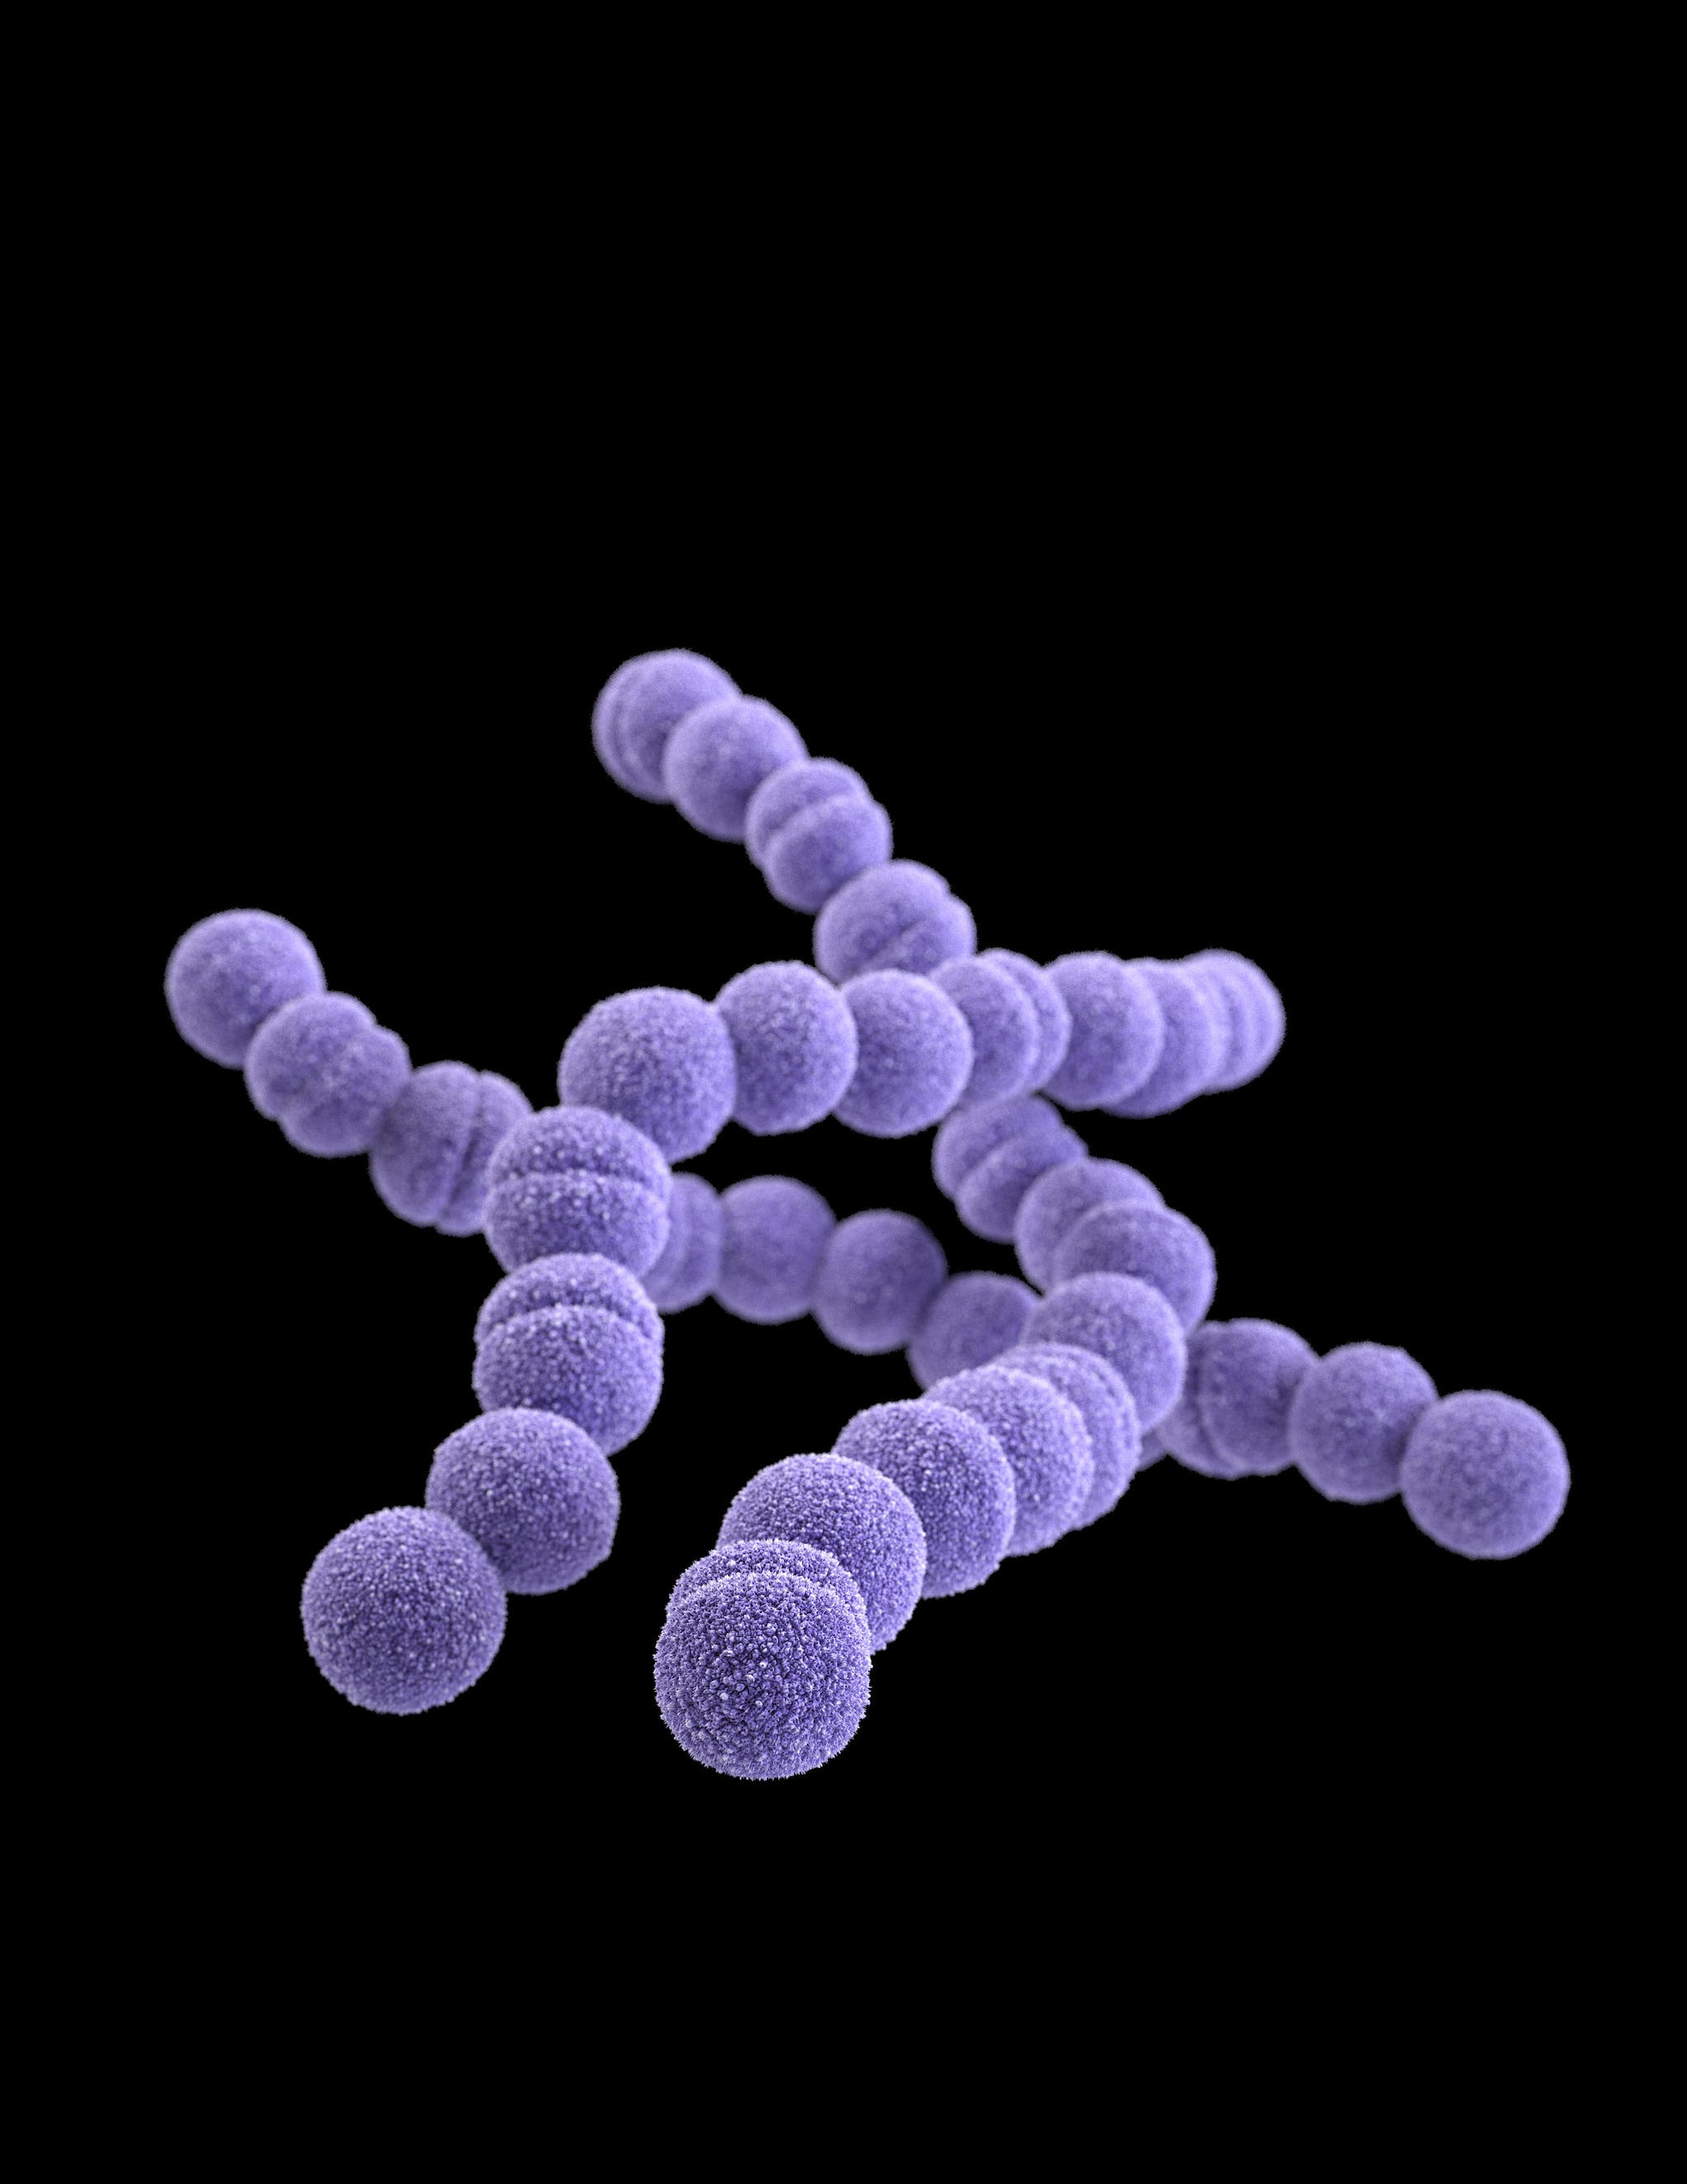 Medical illustration of erythromycin-resistant Group A Streptococcus